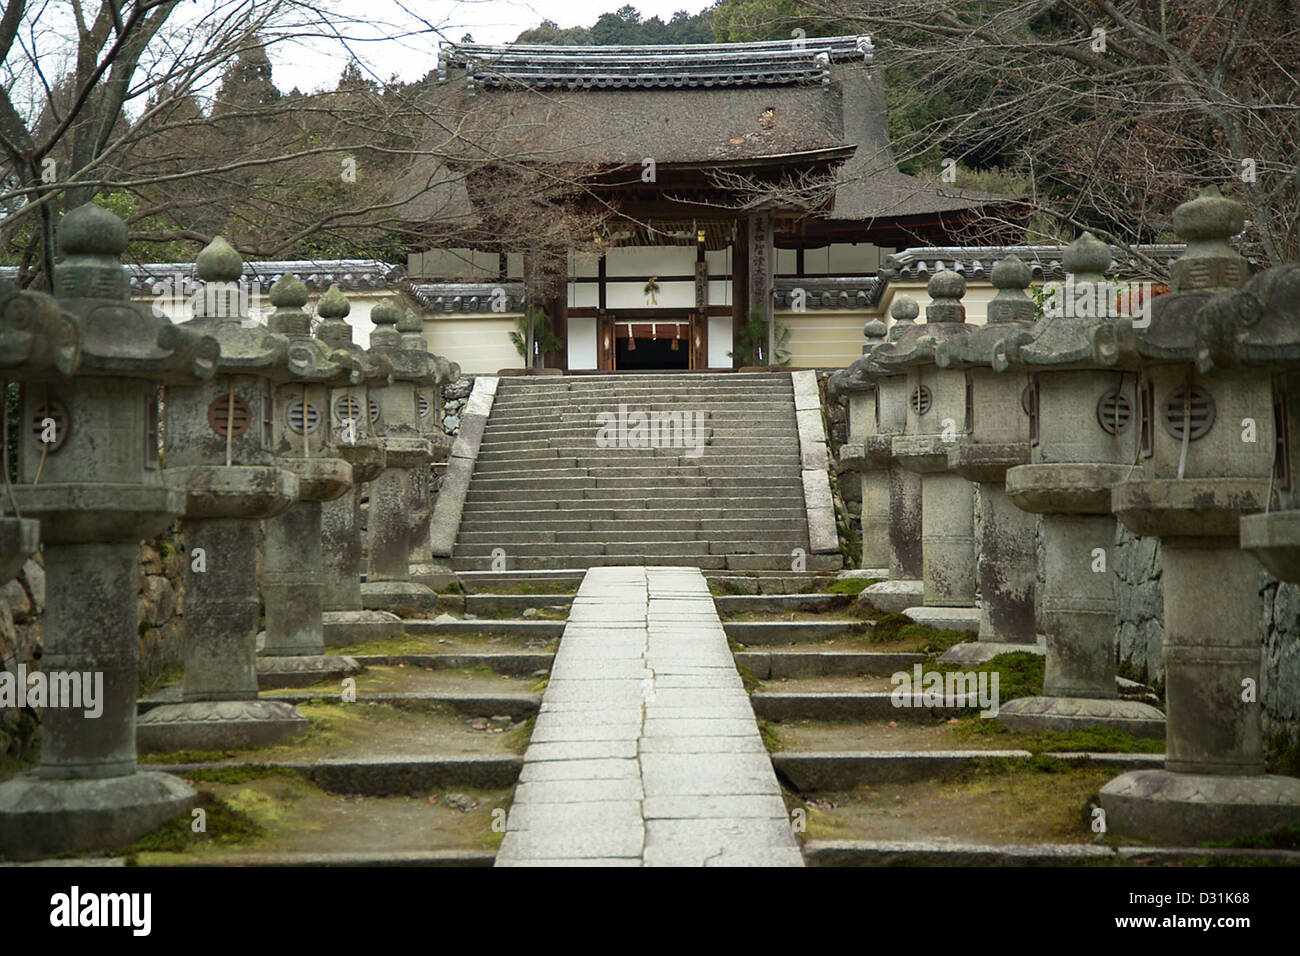 Shikyaku-mon, the four-legged gate at Mii-dera, a Buddhist temple in Otsu, Shiga Prefecture, Japan. Stock Photo